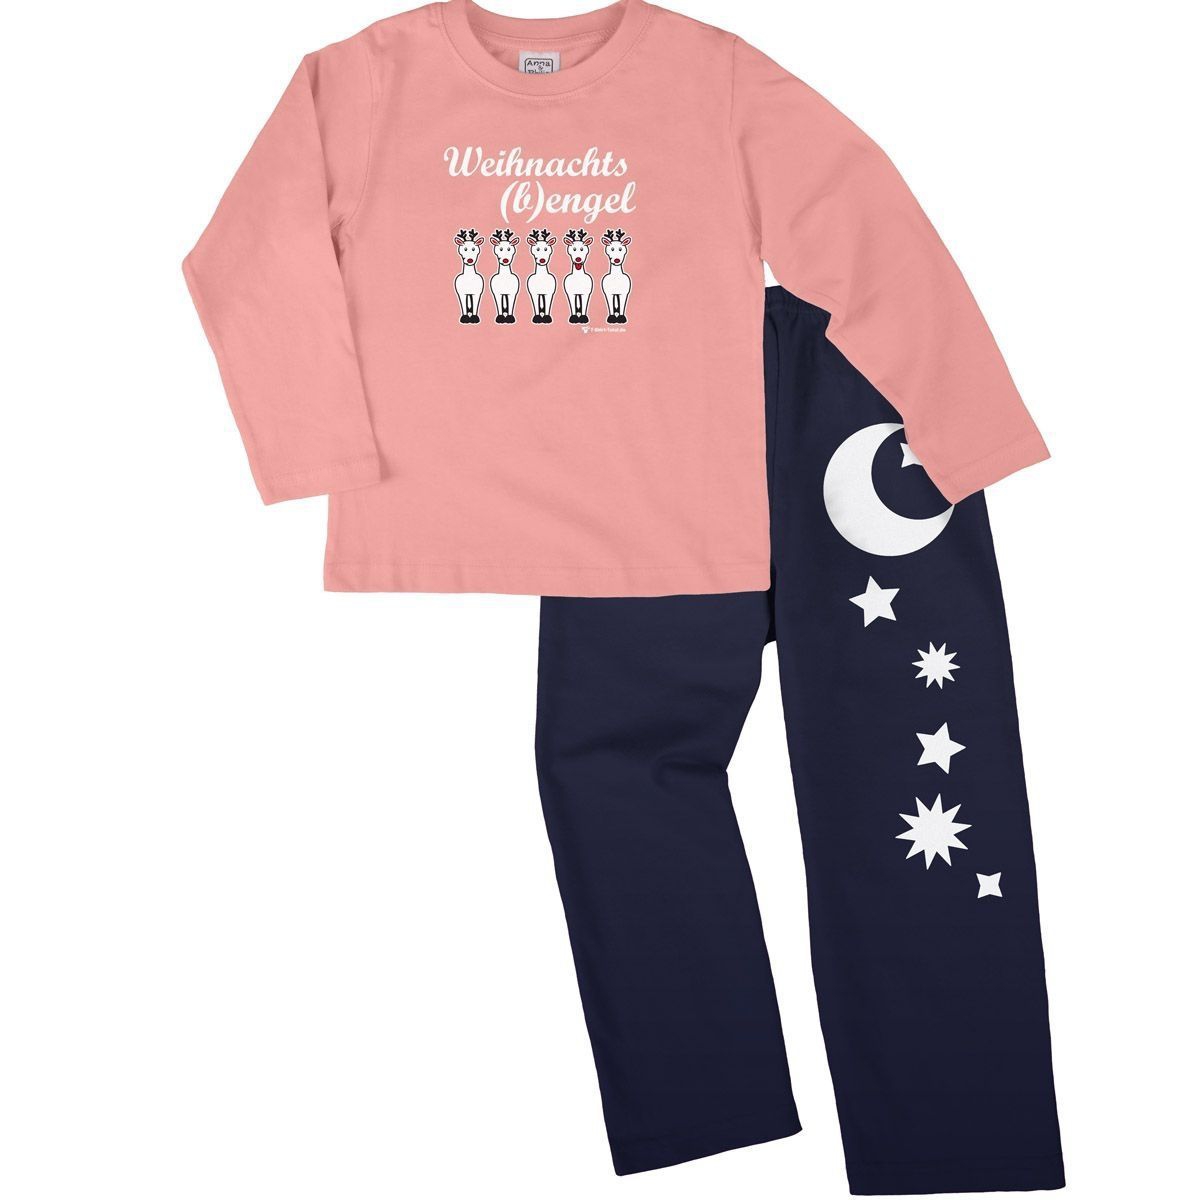 Weihnachtsbengel Pyjama Set rosa / navy 110 / 116